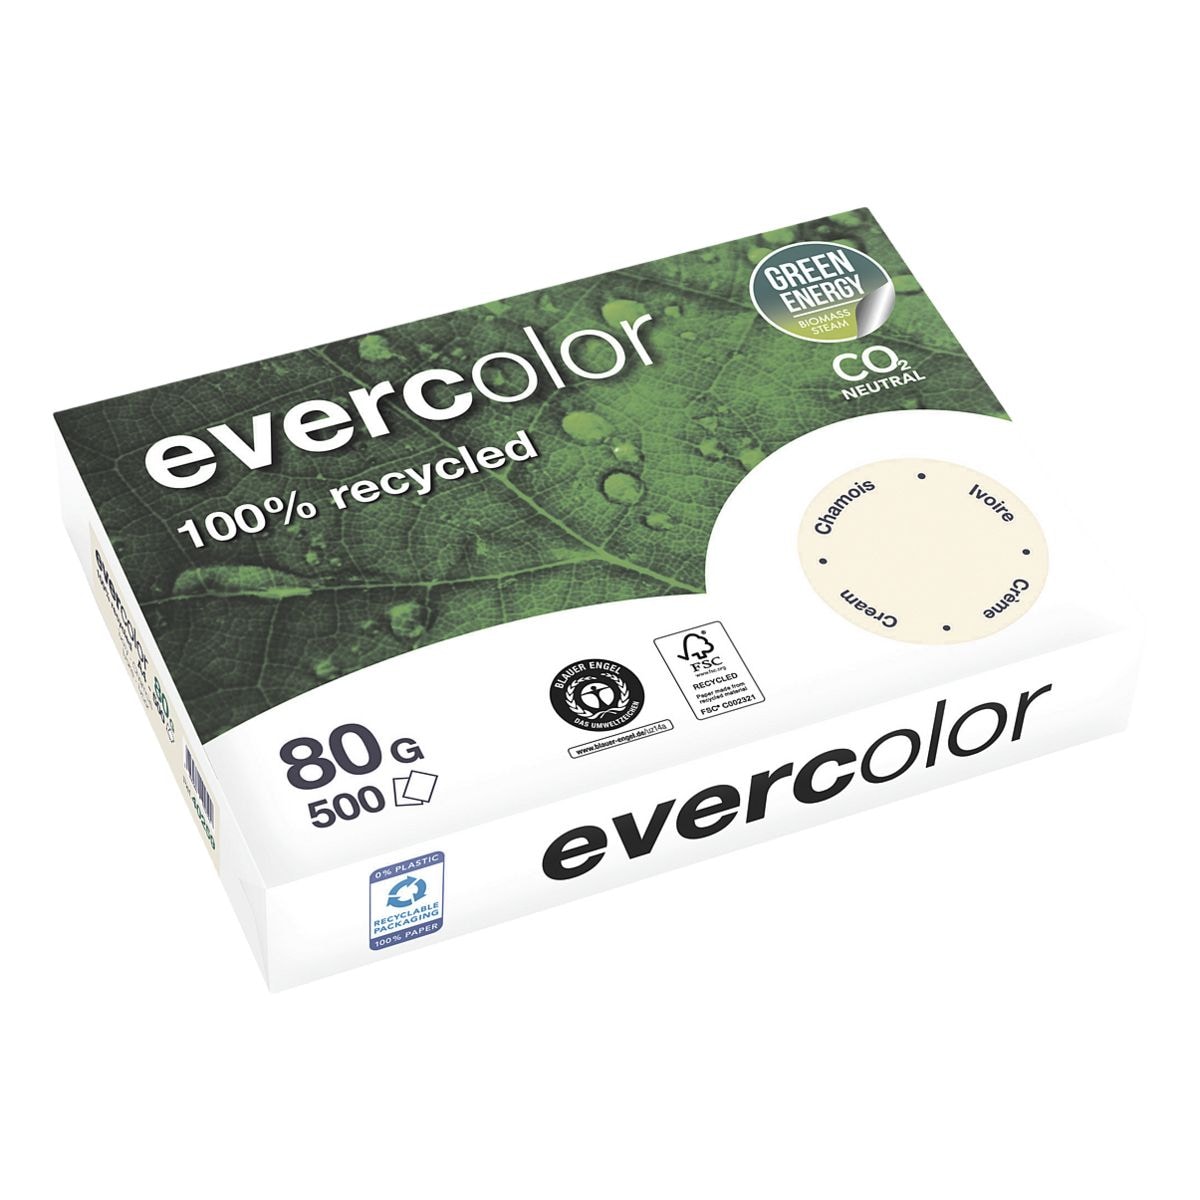 Farbiges Recycling-Multifunktionspapier A4 Clairefontaine Evercolor - pastellfarben - 500 Blatt gesamt, 80g/qm